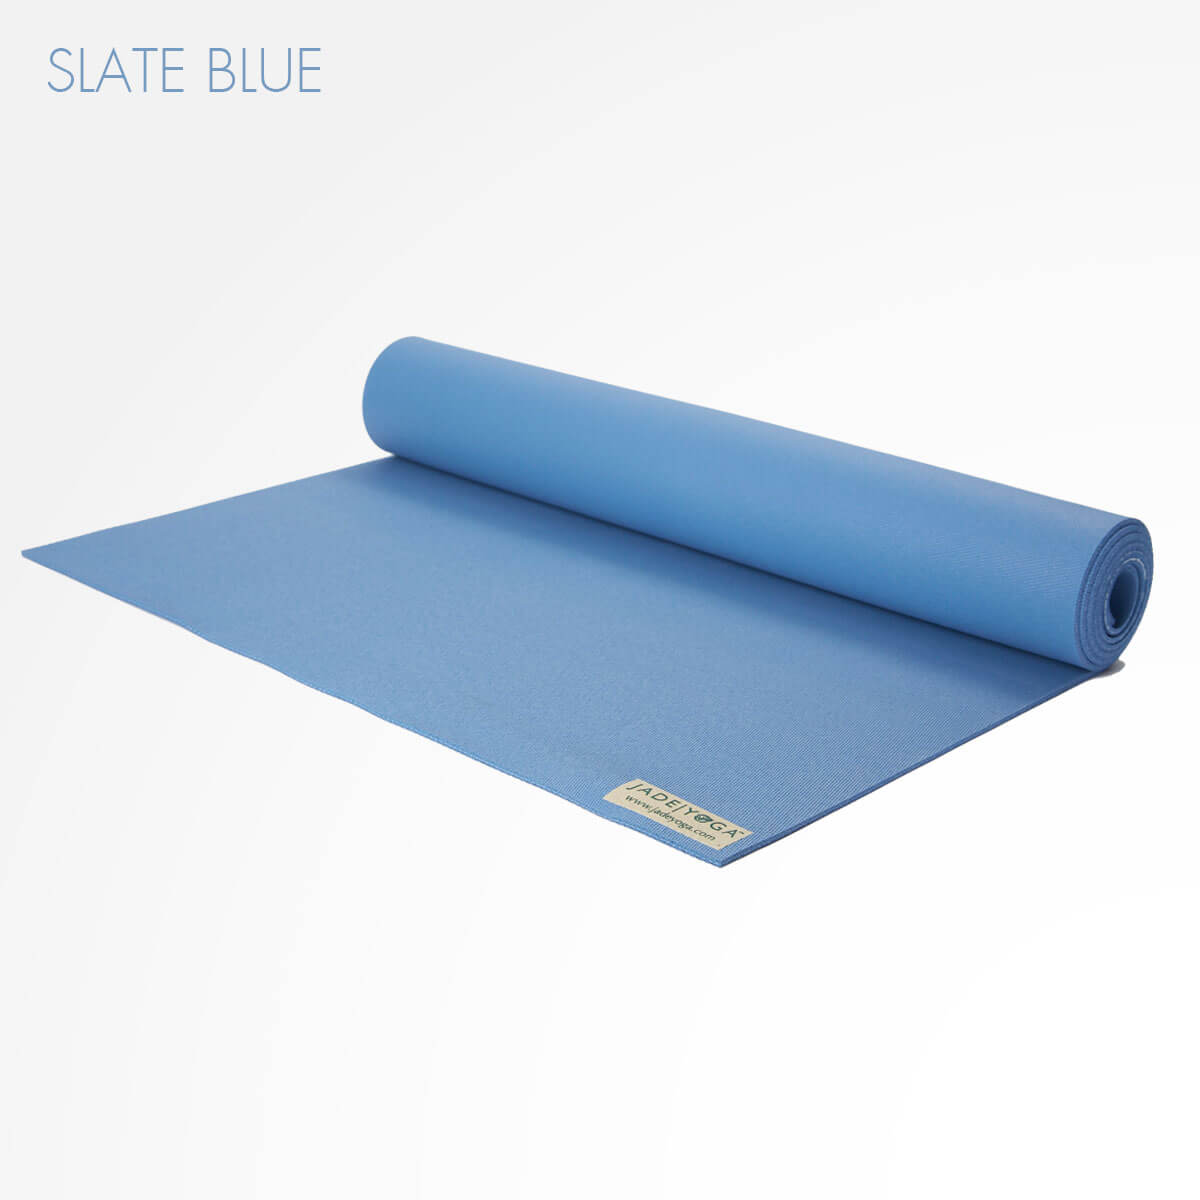 Blue Yoga Mat - best for restorative yoga – ByAlex